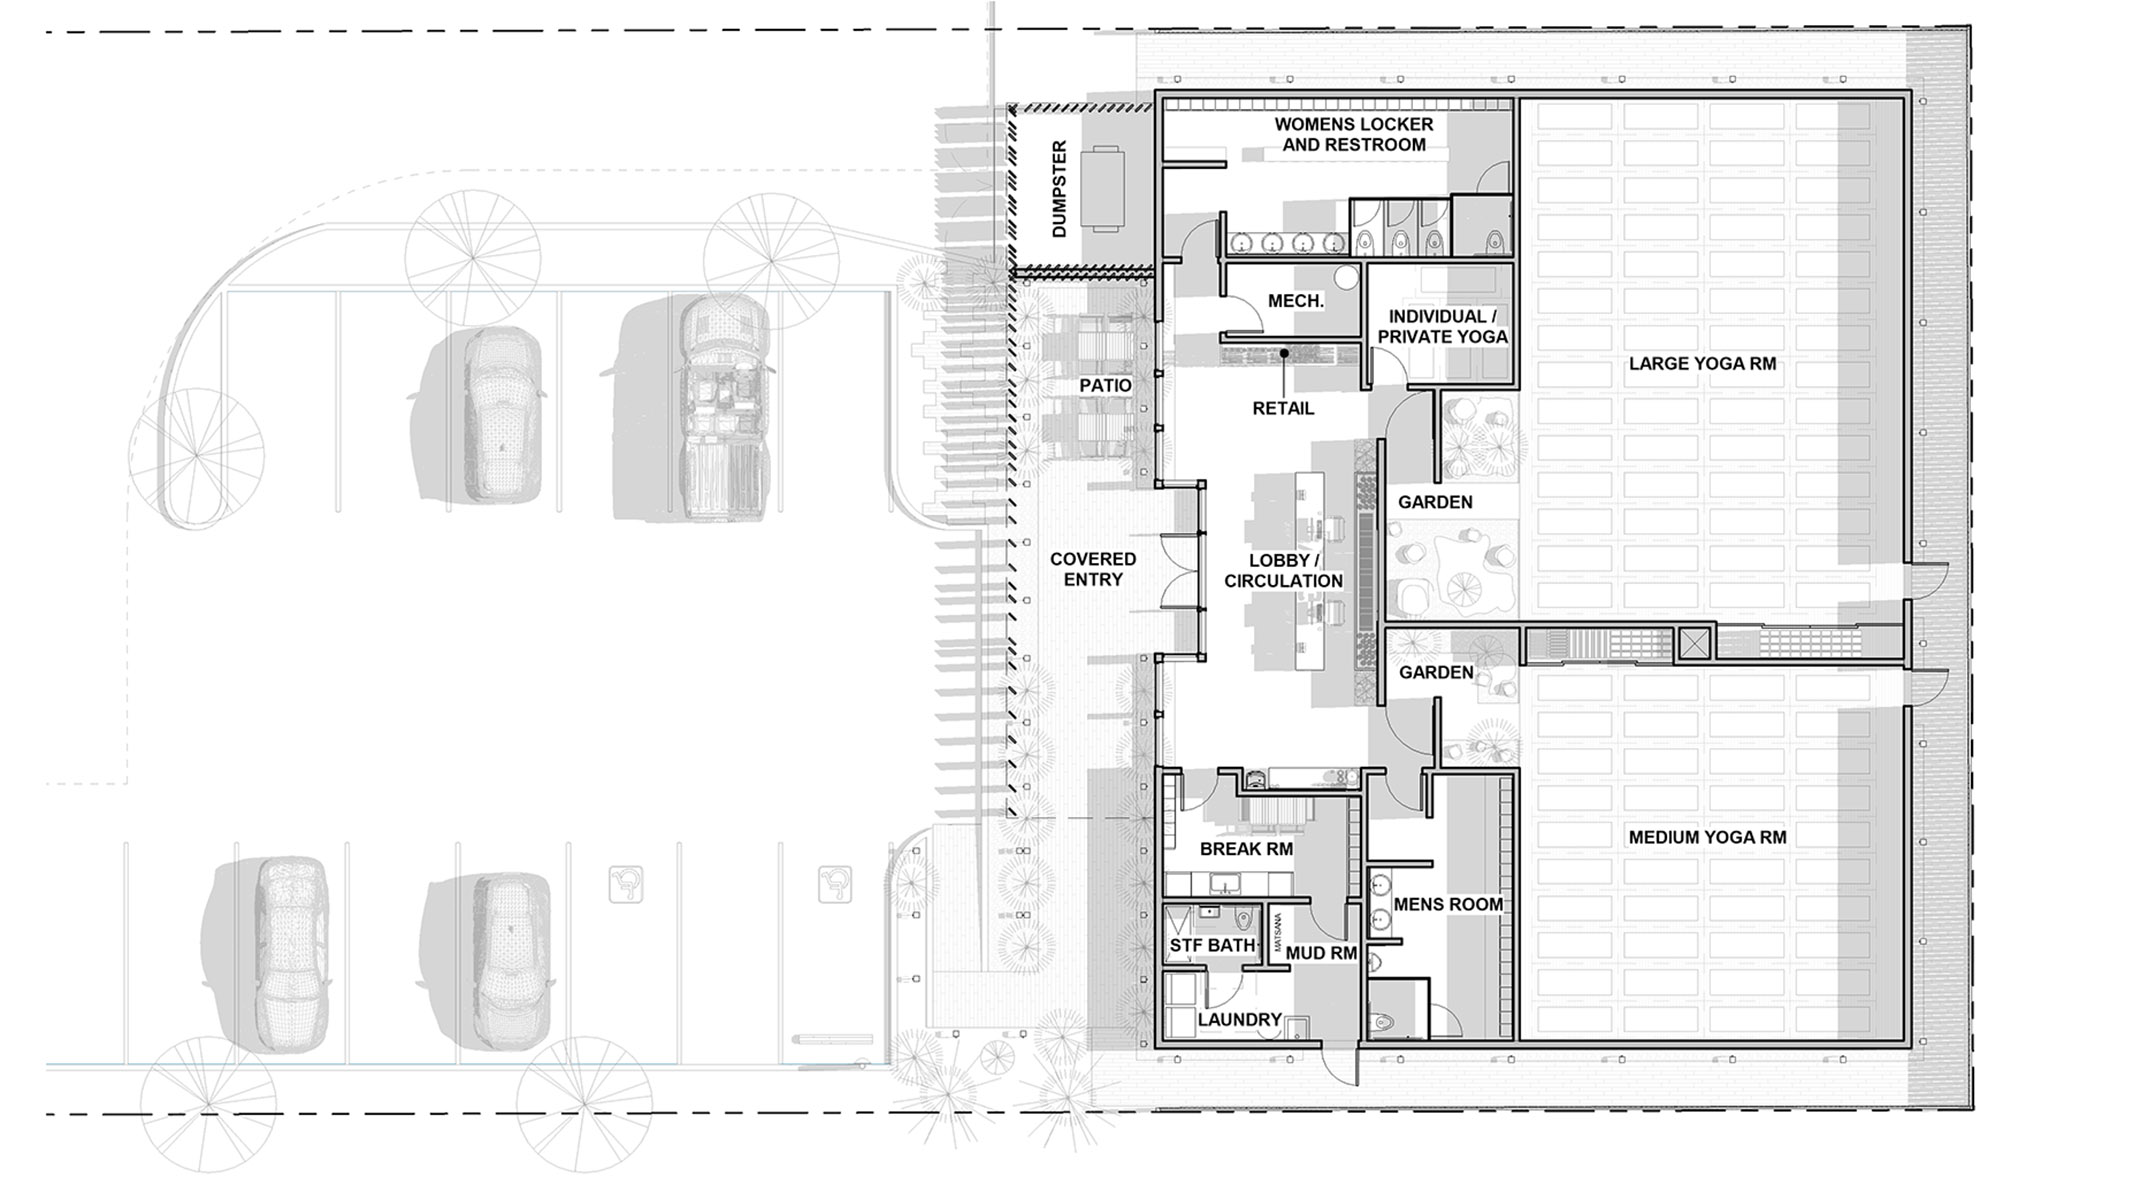 Yoga Studio Floor Plan - Propel Studio Architecture.jpg